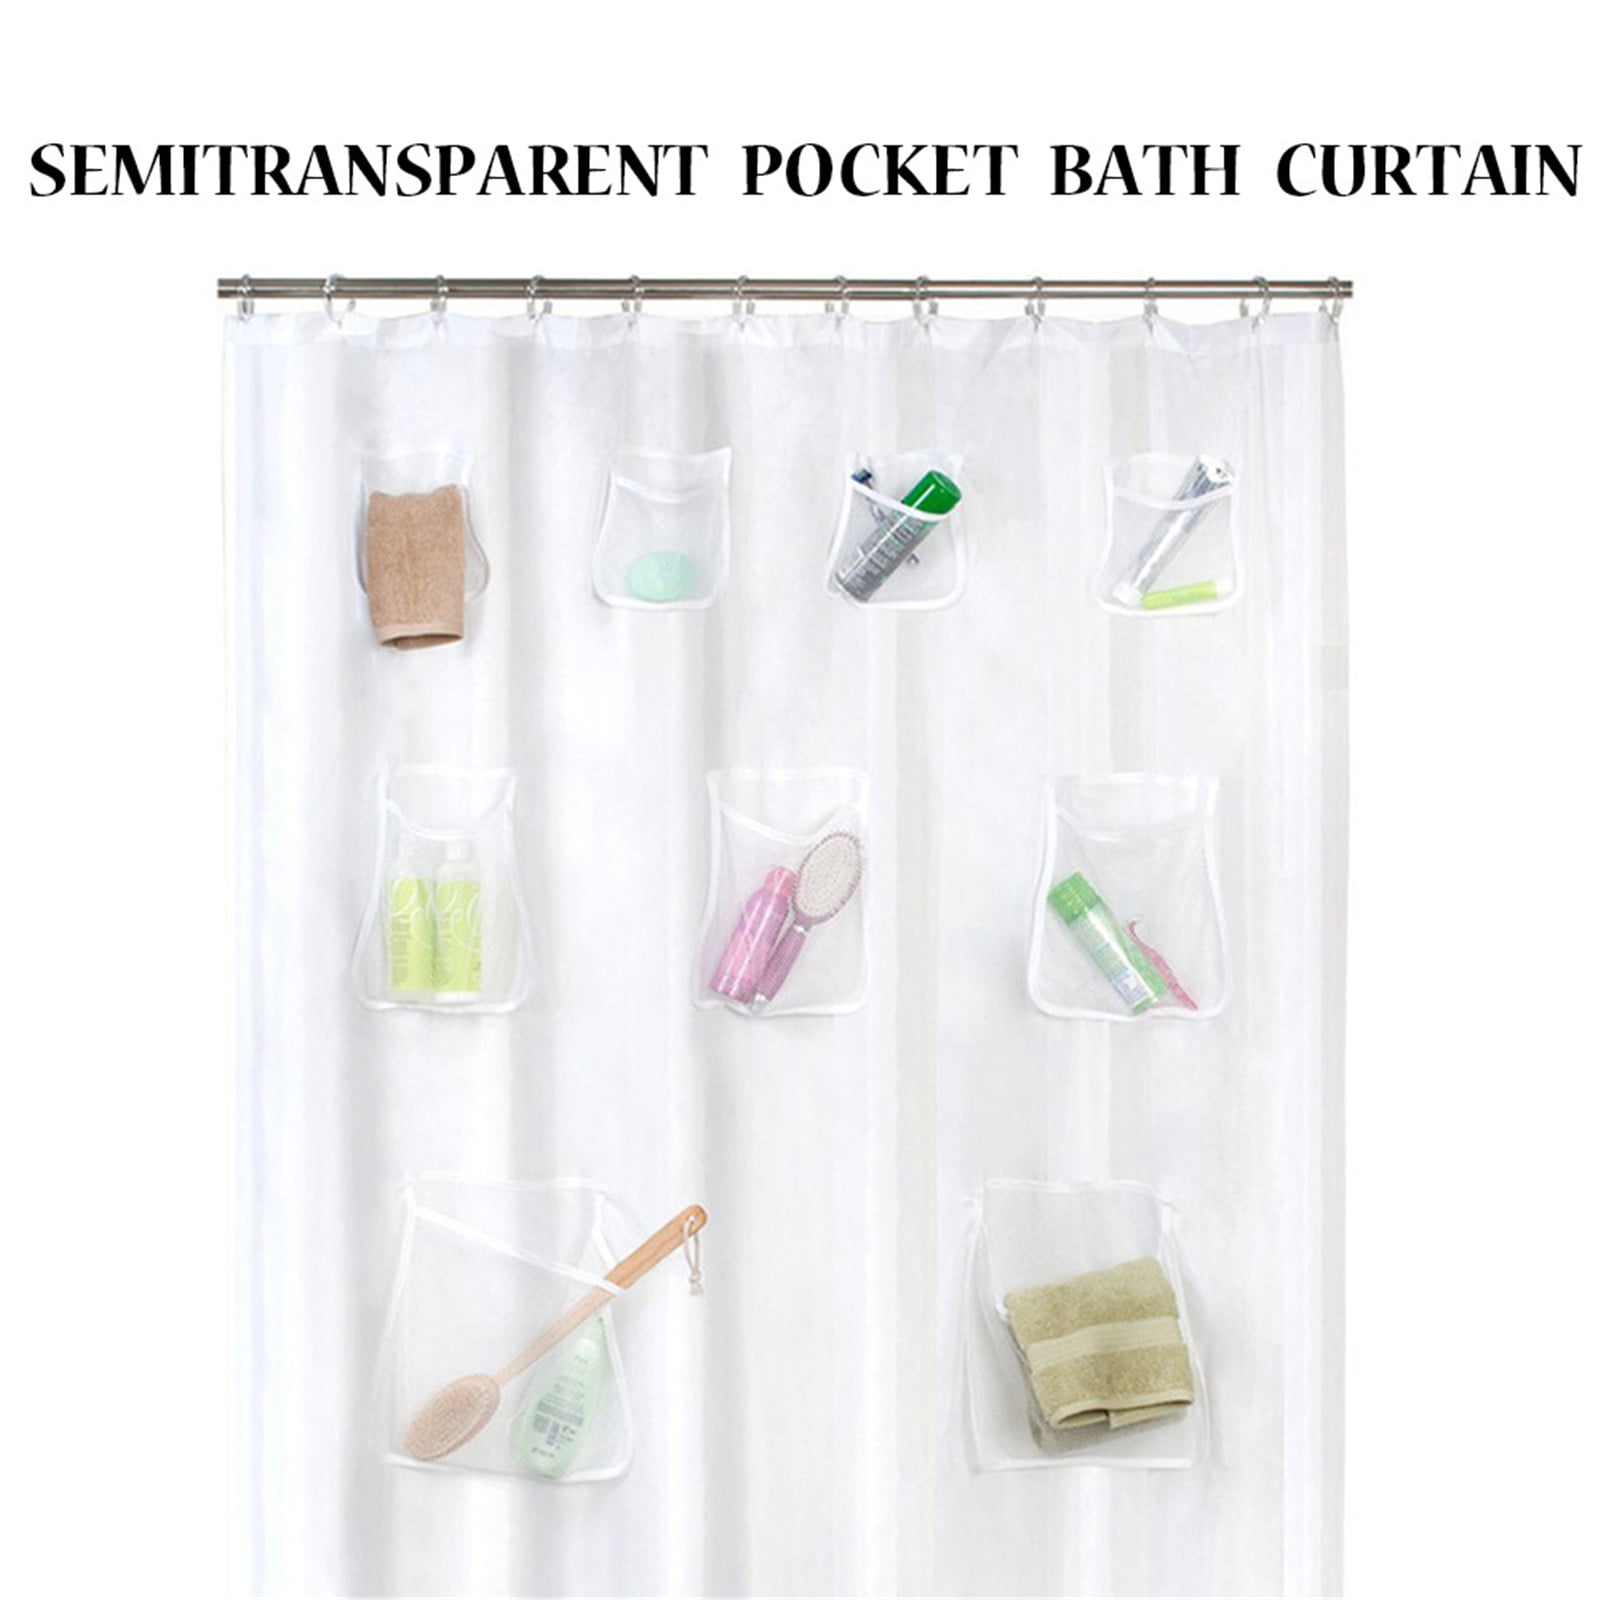 Multifunctional bathroom translucent shower curtain with pocket waterproof h`yu 